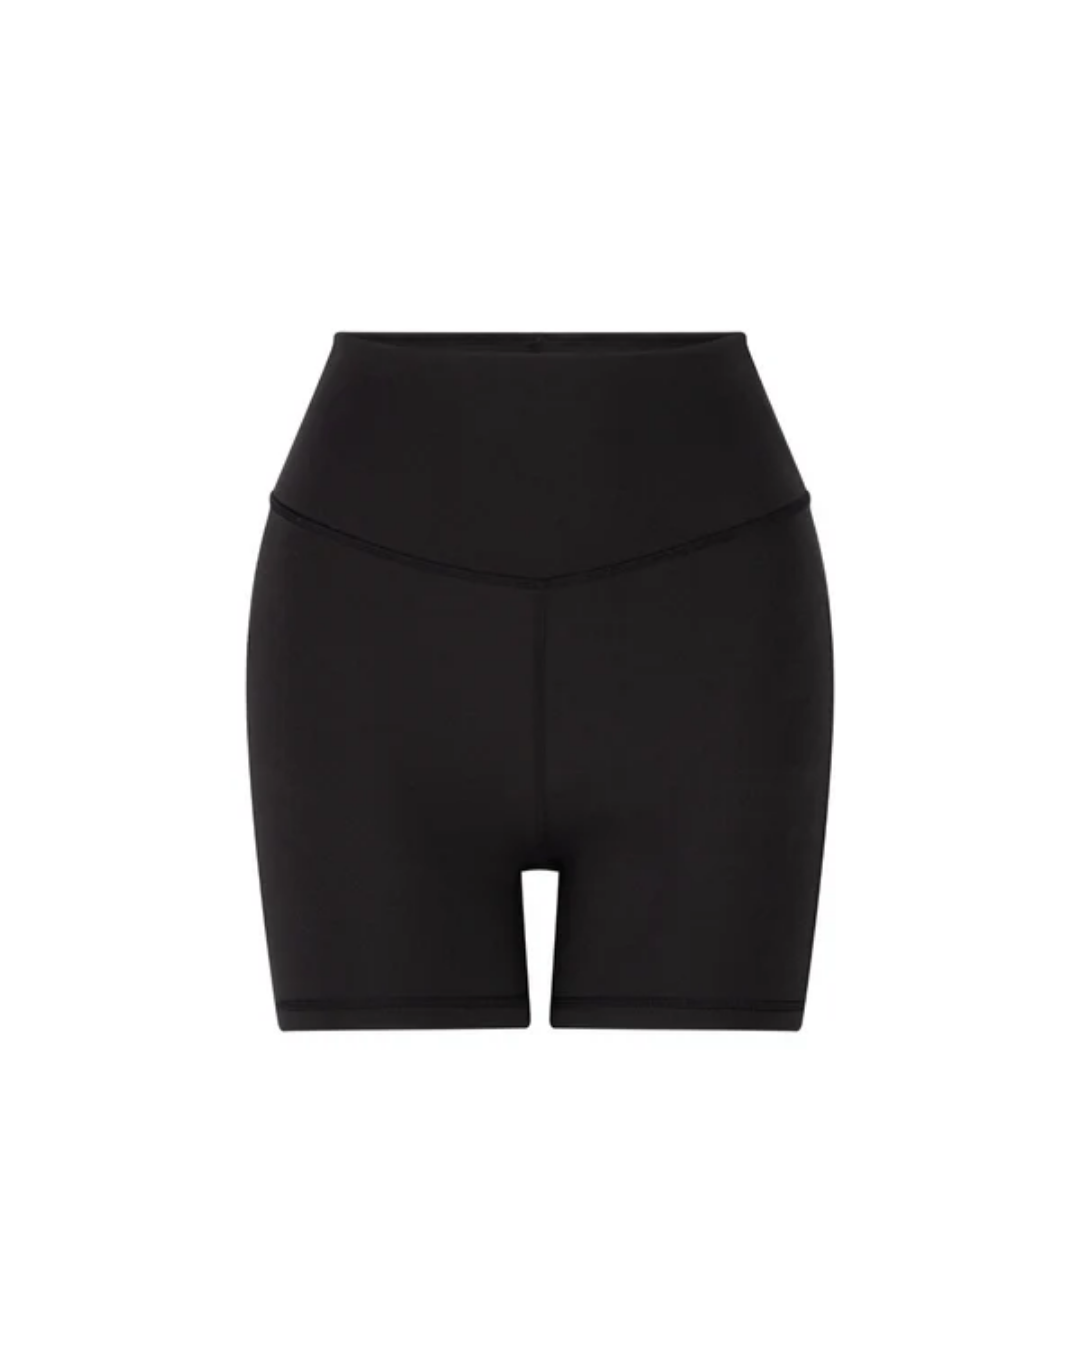 Sprint Short - Black Activewear by Pinky &amp; Kamal - Prae Wellness